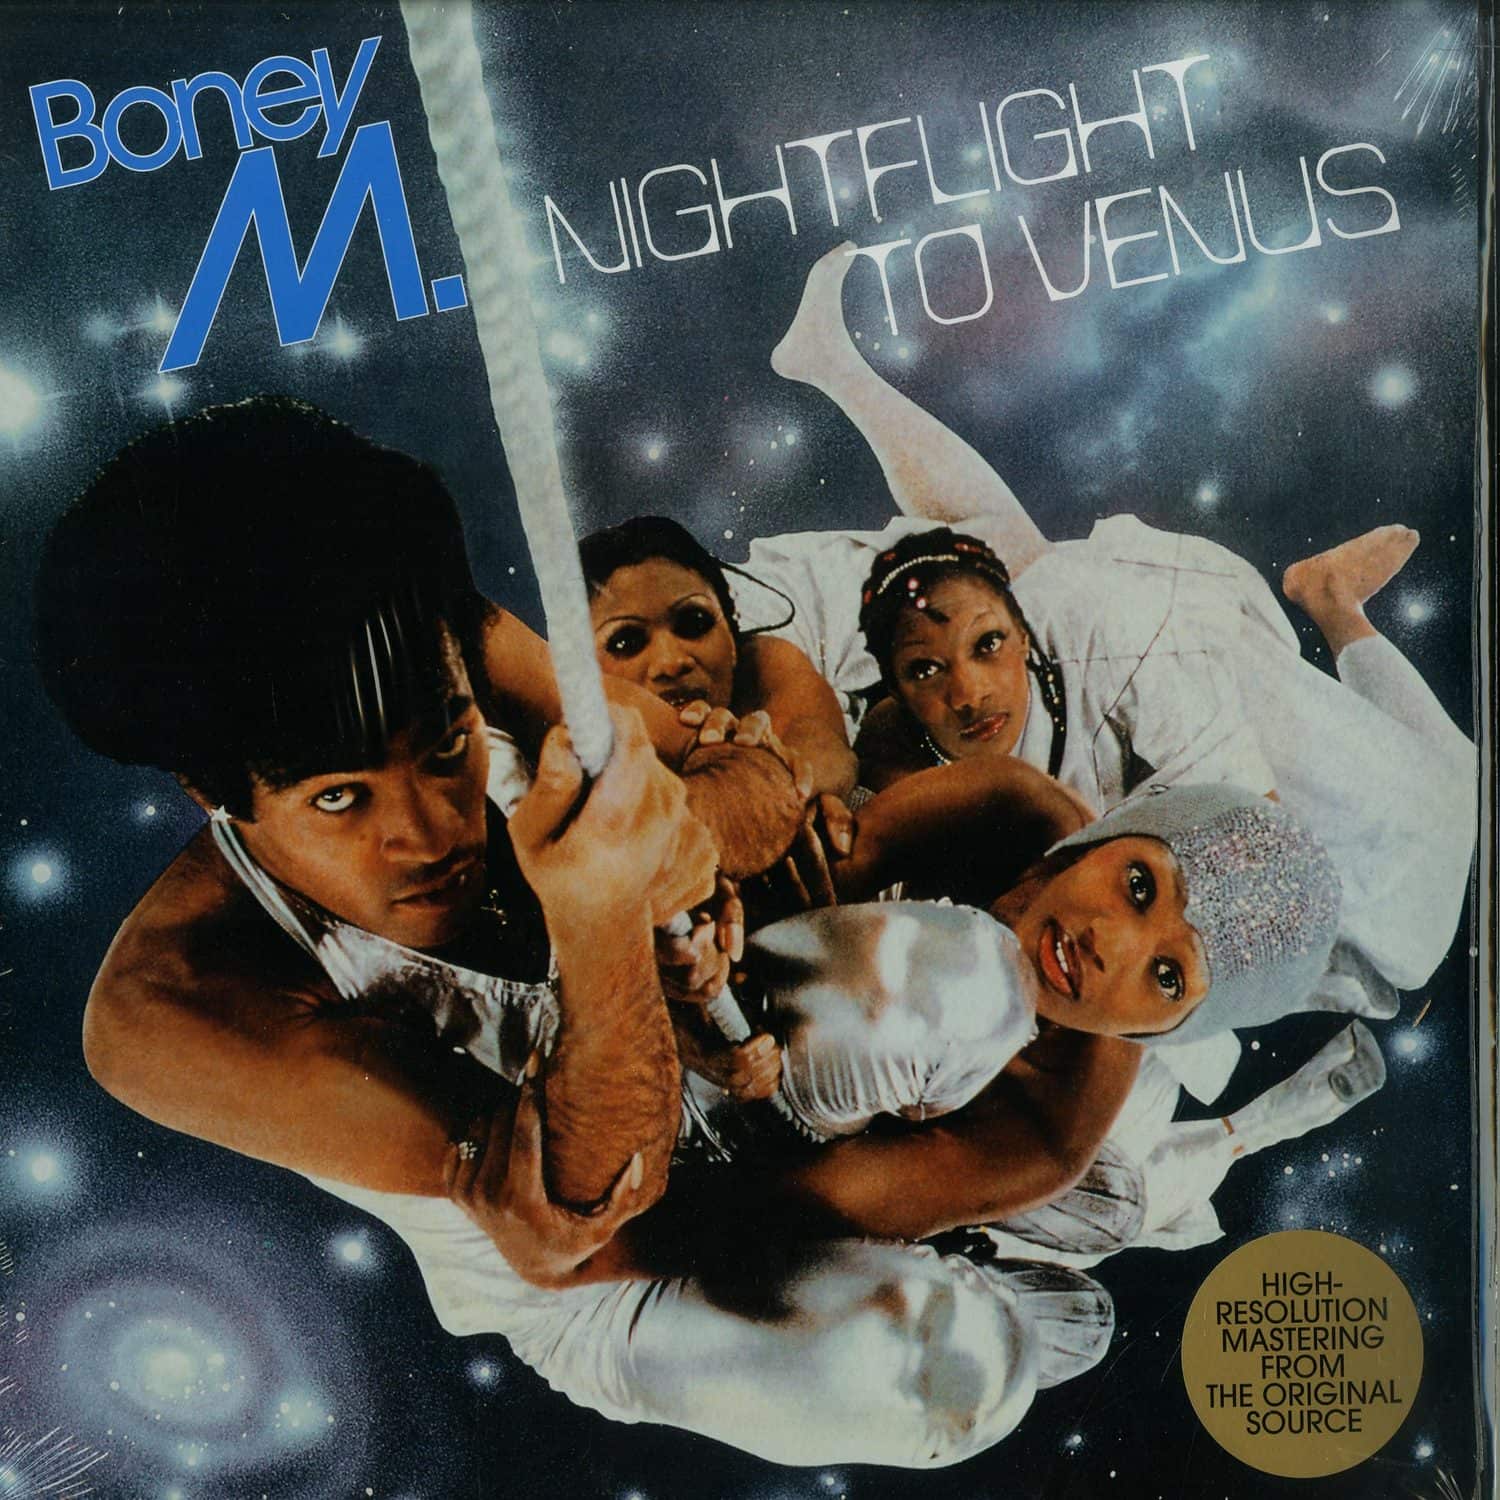 Boney M. - NIGHTFLIGHT TO VENUS 1978 